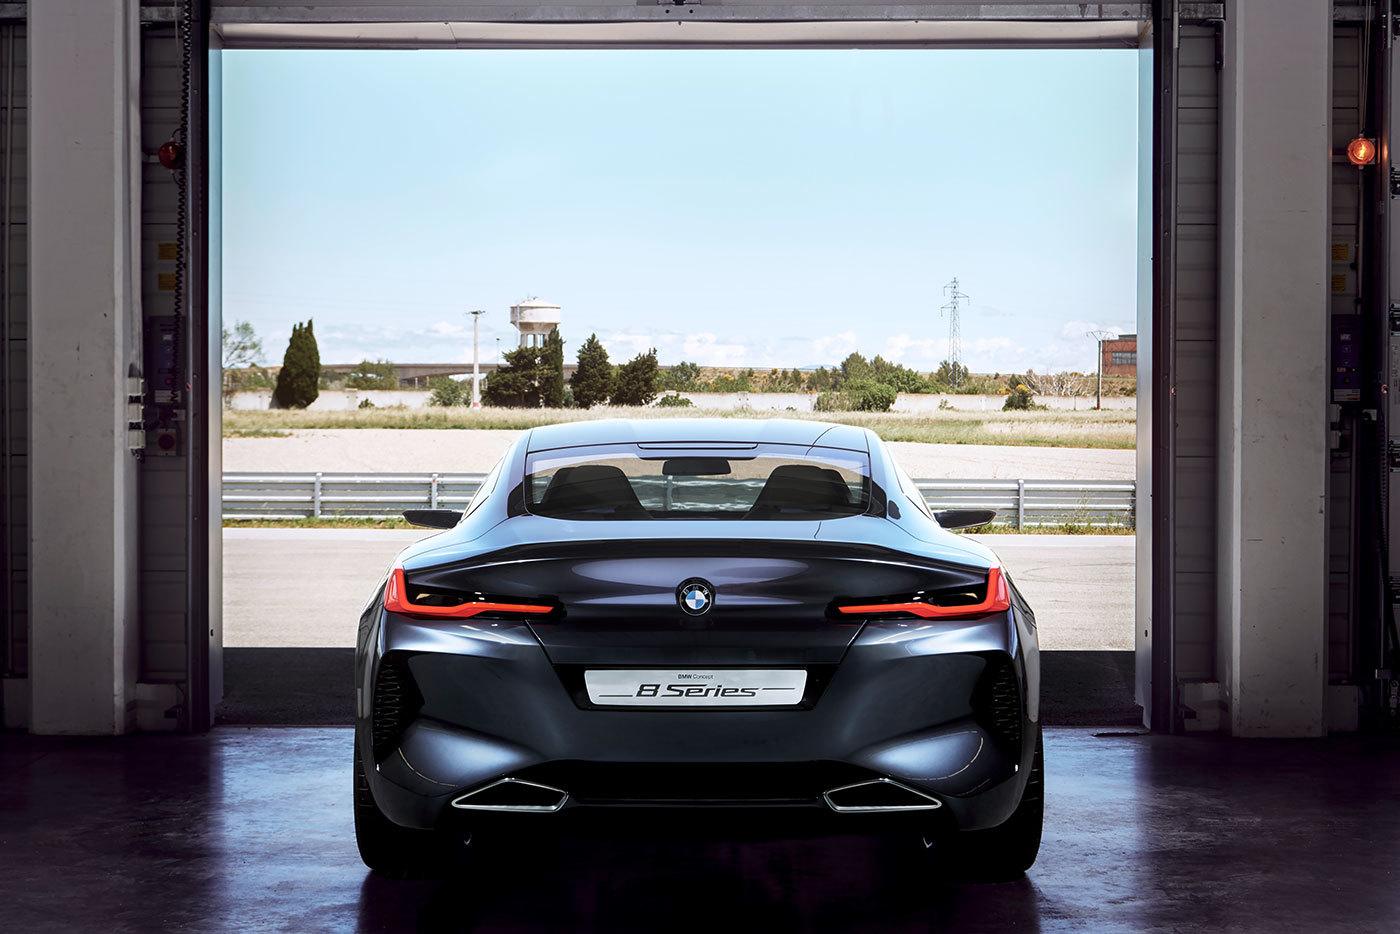 imagen 7 de BMW Serie 8 Concept, regreso al futuro. Ese deportivo coupé que querríamos todos.